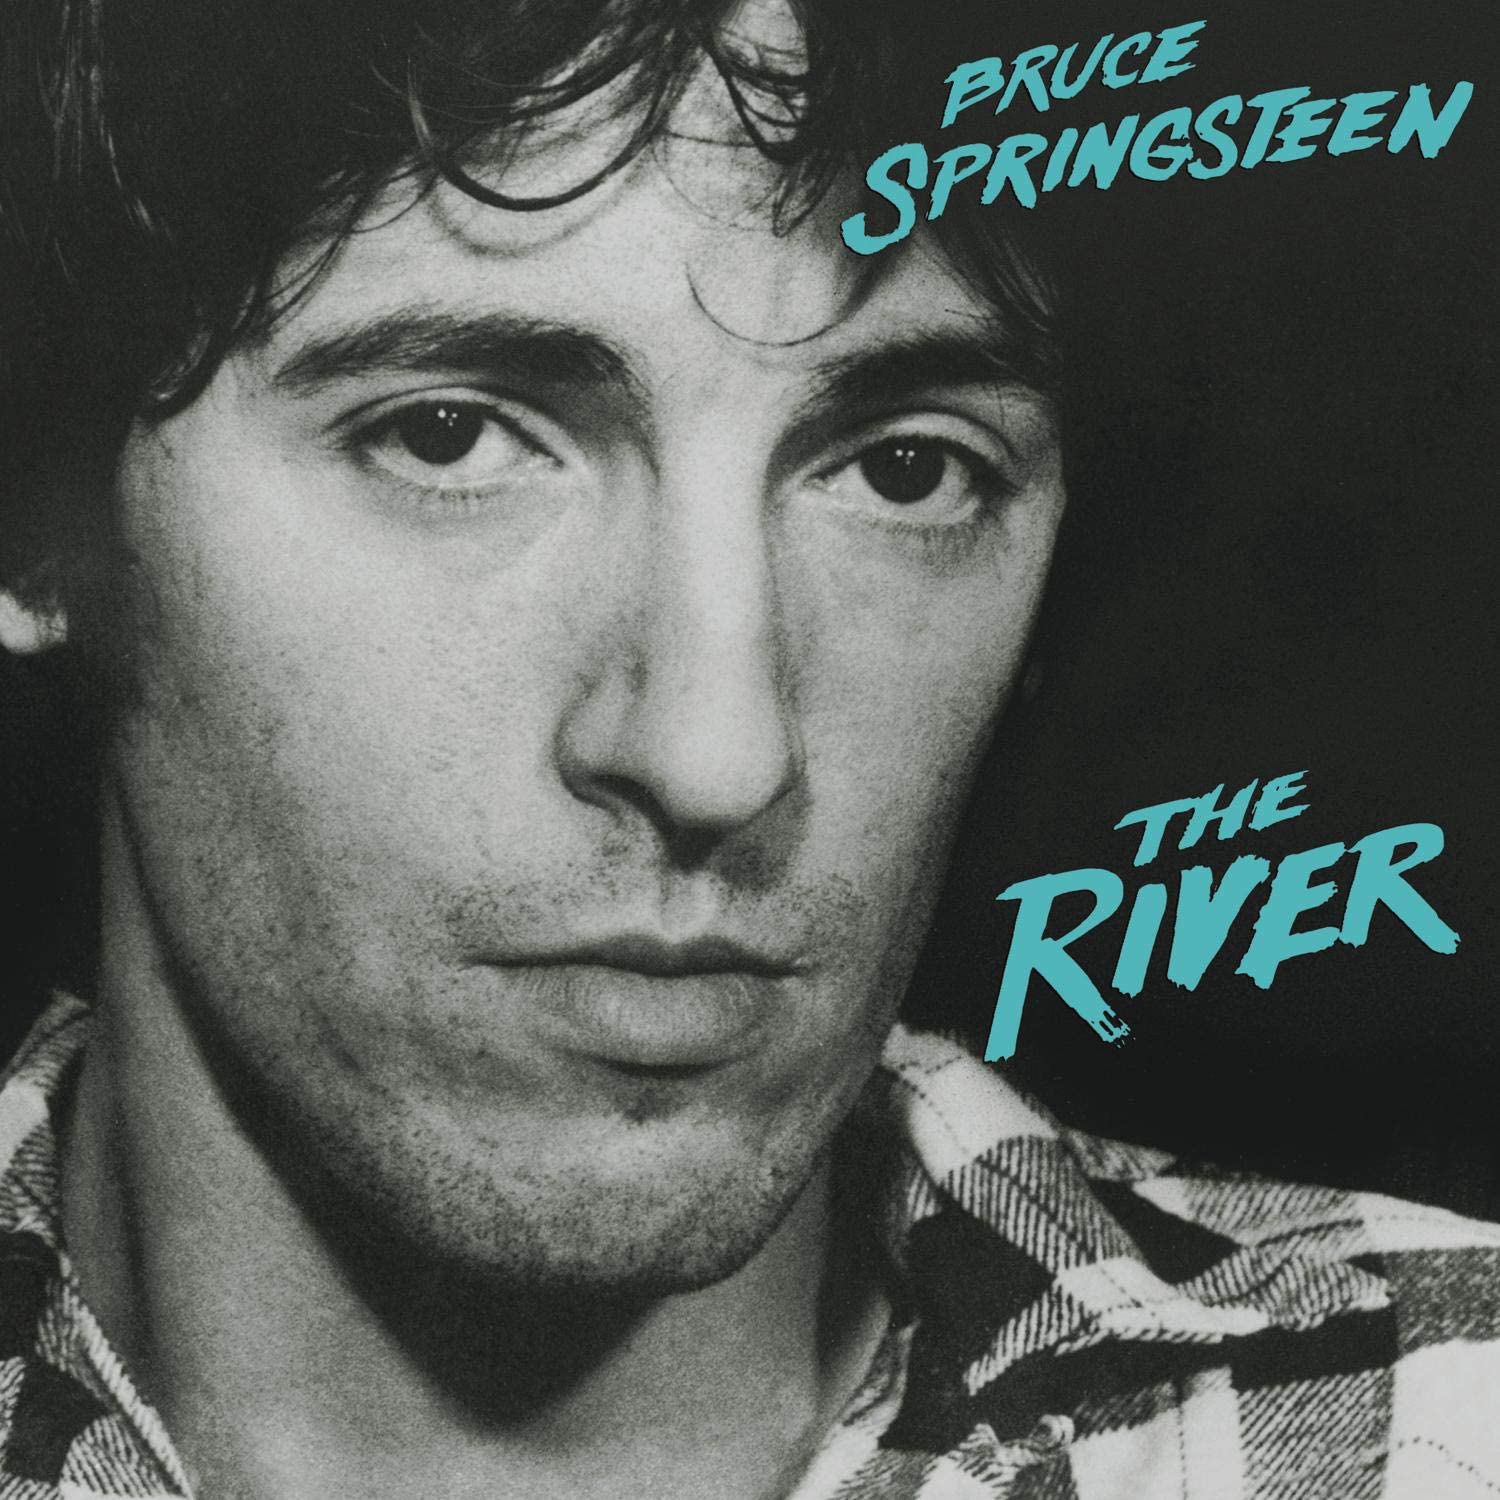 Bruce Springsteen – The River (Vinyl, 2014 Re-master)